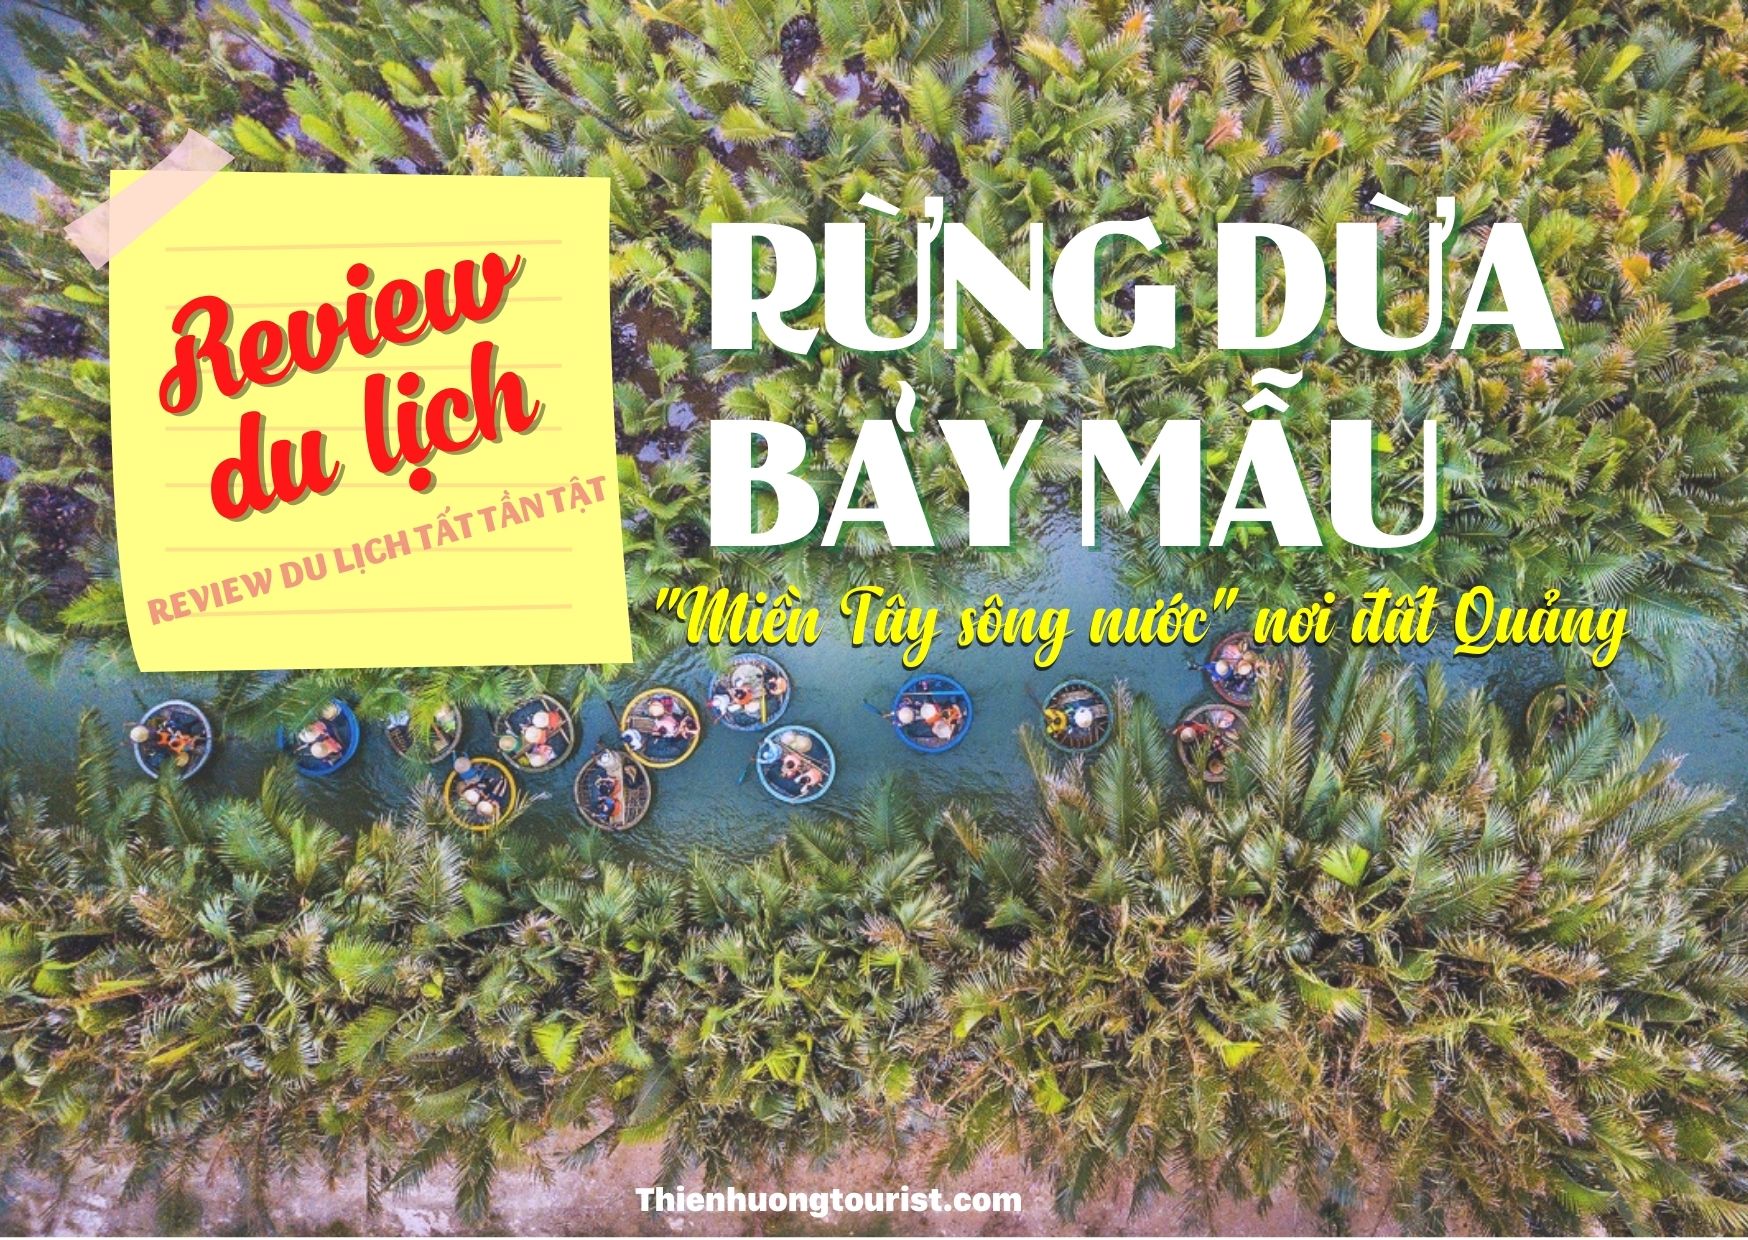 Review du lịch Rừng dừa Bảy Mẫu